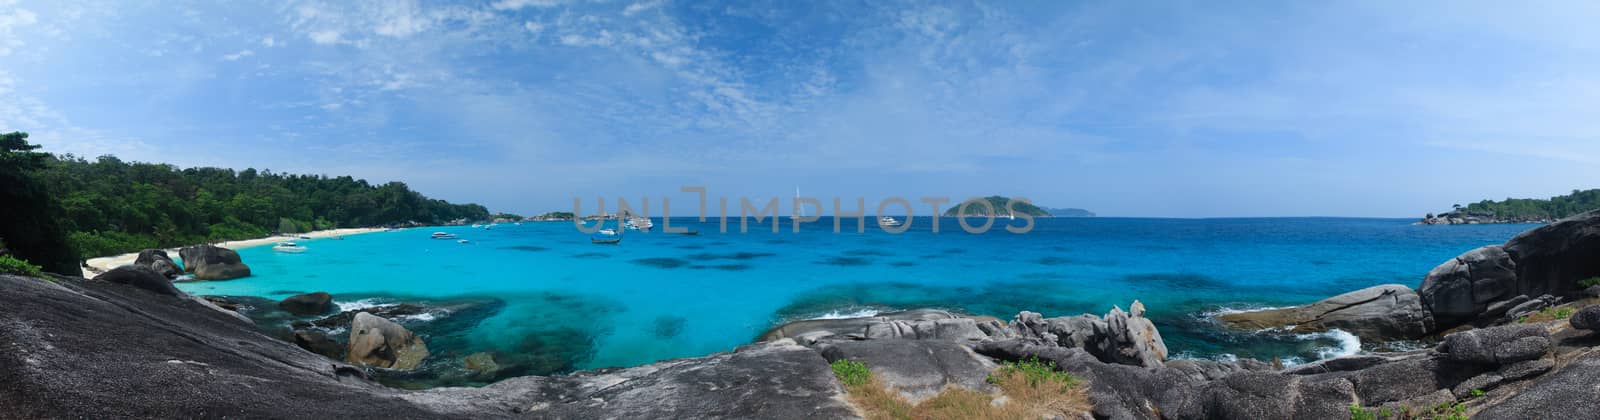  Panorama Beach at Similan island by sorayuth26